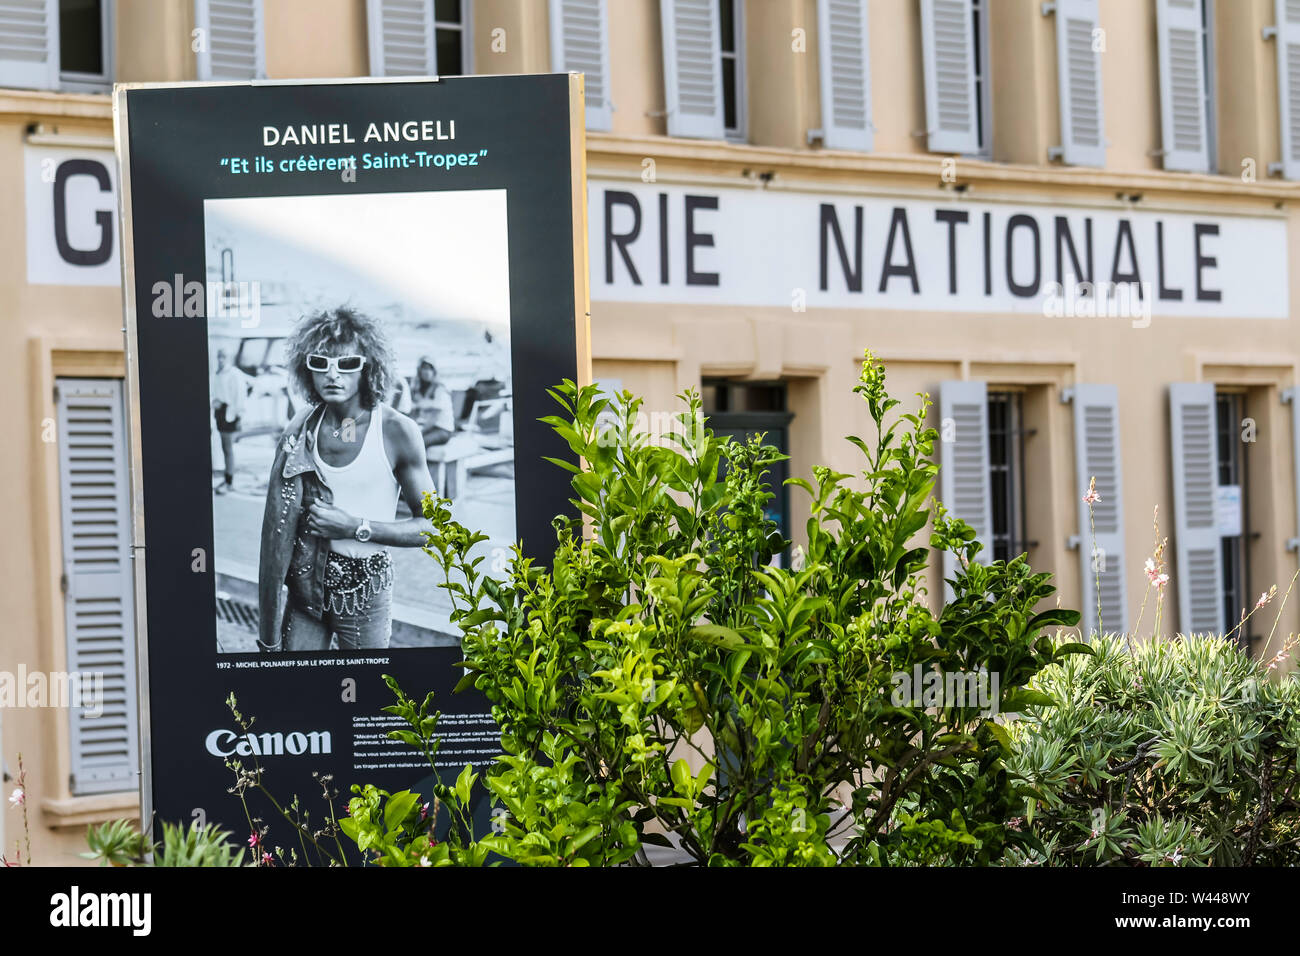 Grand Prix Foto-Straße Ausstellung vor der Gendarmerie - CANON - Daniel Angeli Le Roi Paparazzi - Juni 07, 2019 - Saint Tropez. Frankreich Stockfoto